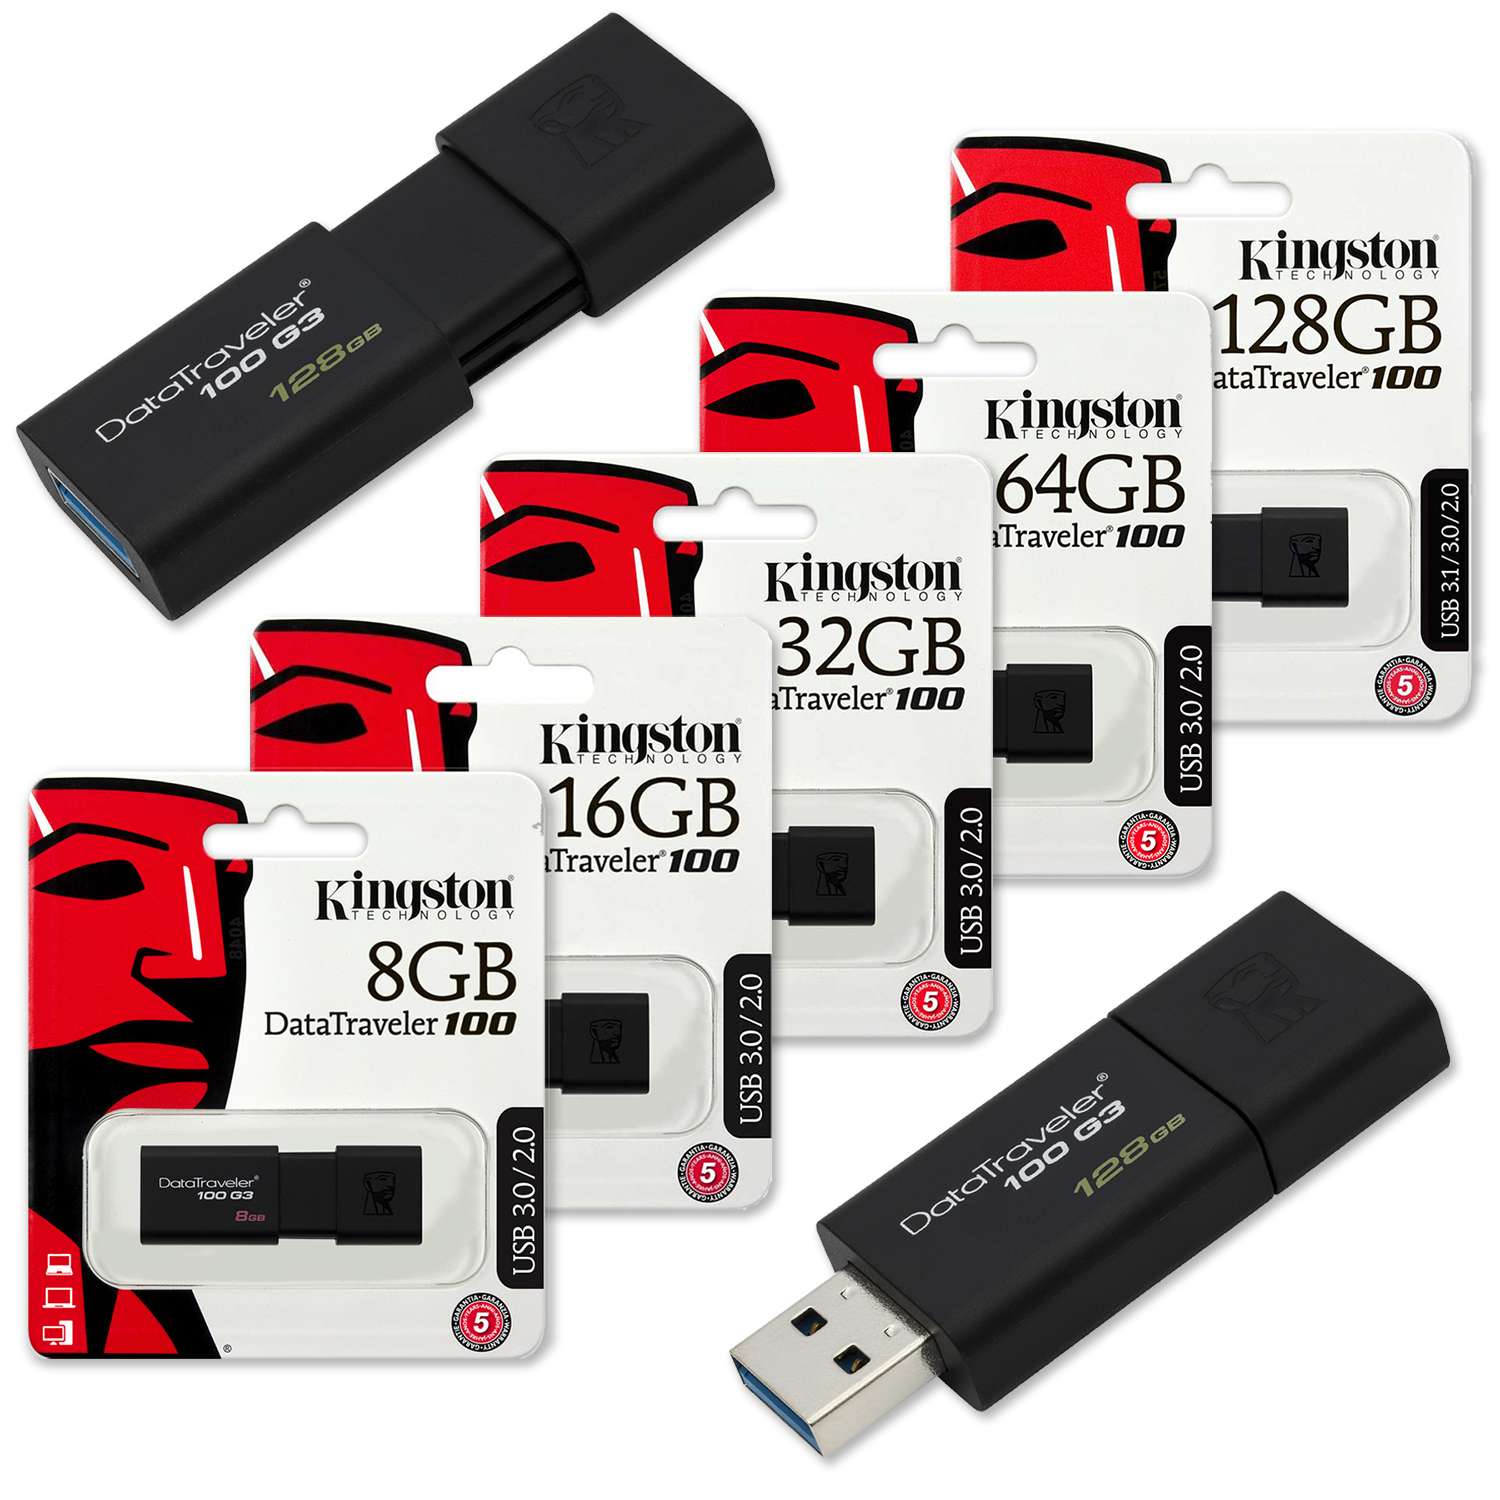 Сколько стоит флешка на 64. Kingston DATATRAVELER 100 g3 64gb. USB 3.0 64gb Kingston data traveler dt100-g3. 64 ГБ Kingston DATATRAVELER 3.0. Kingston USB Drive 64gb dt100g3/64gb (USB3.0).